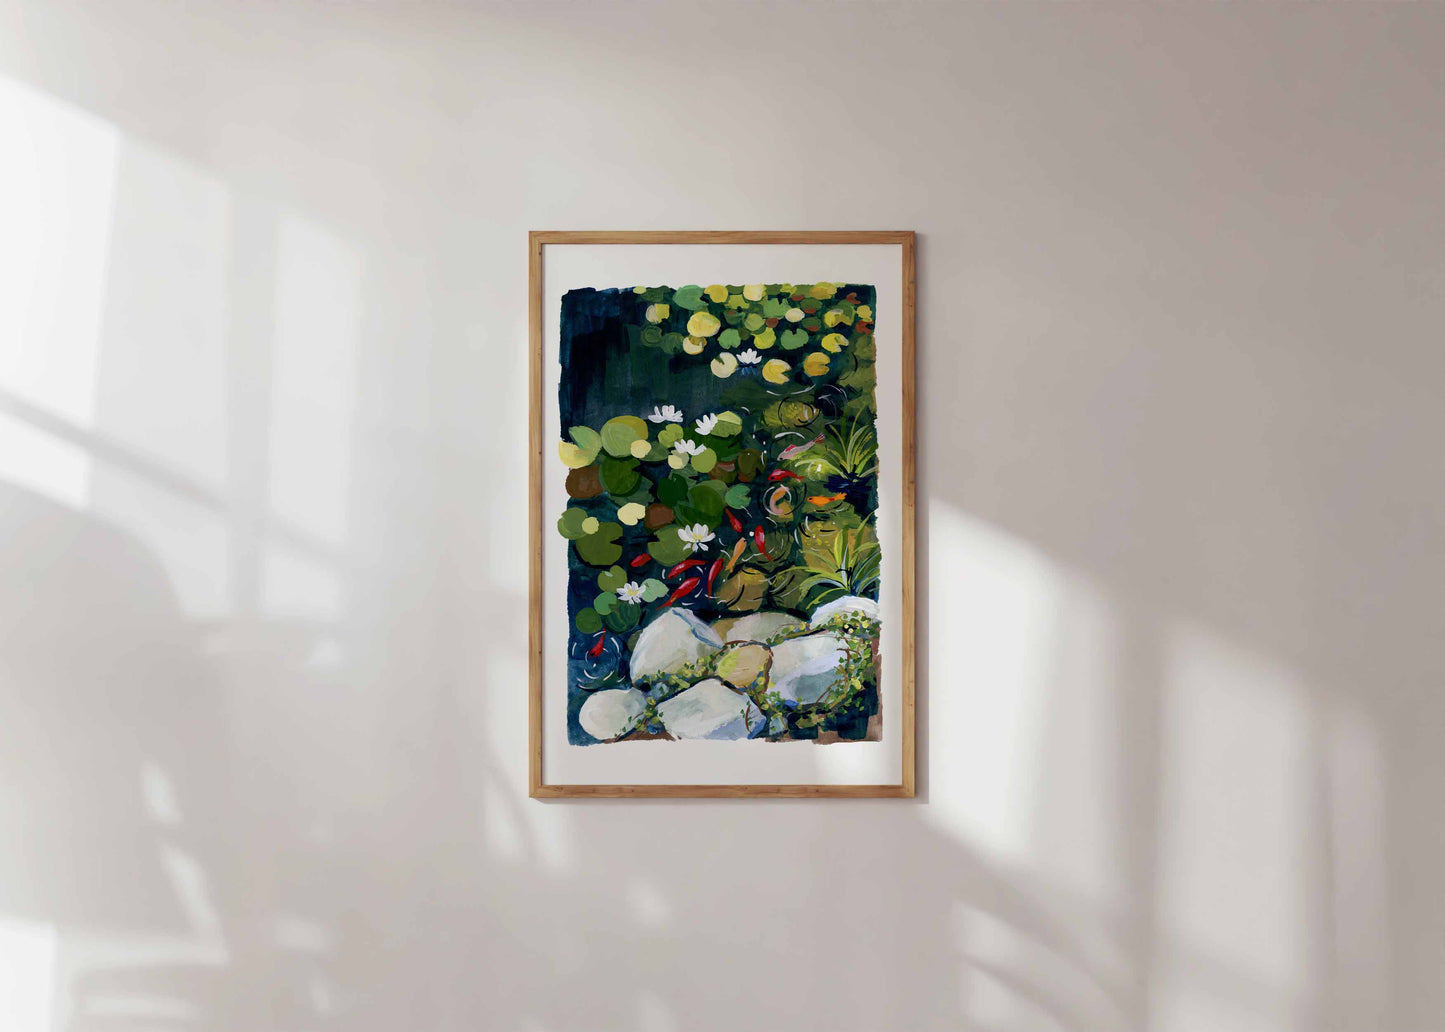 Summer pond- Koi fish and waterlilies painting- Wall art print